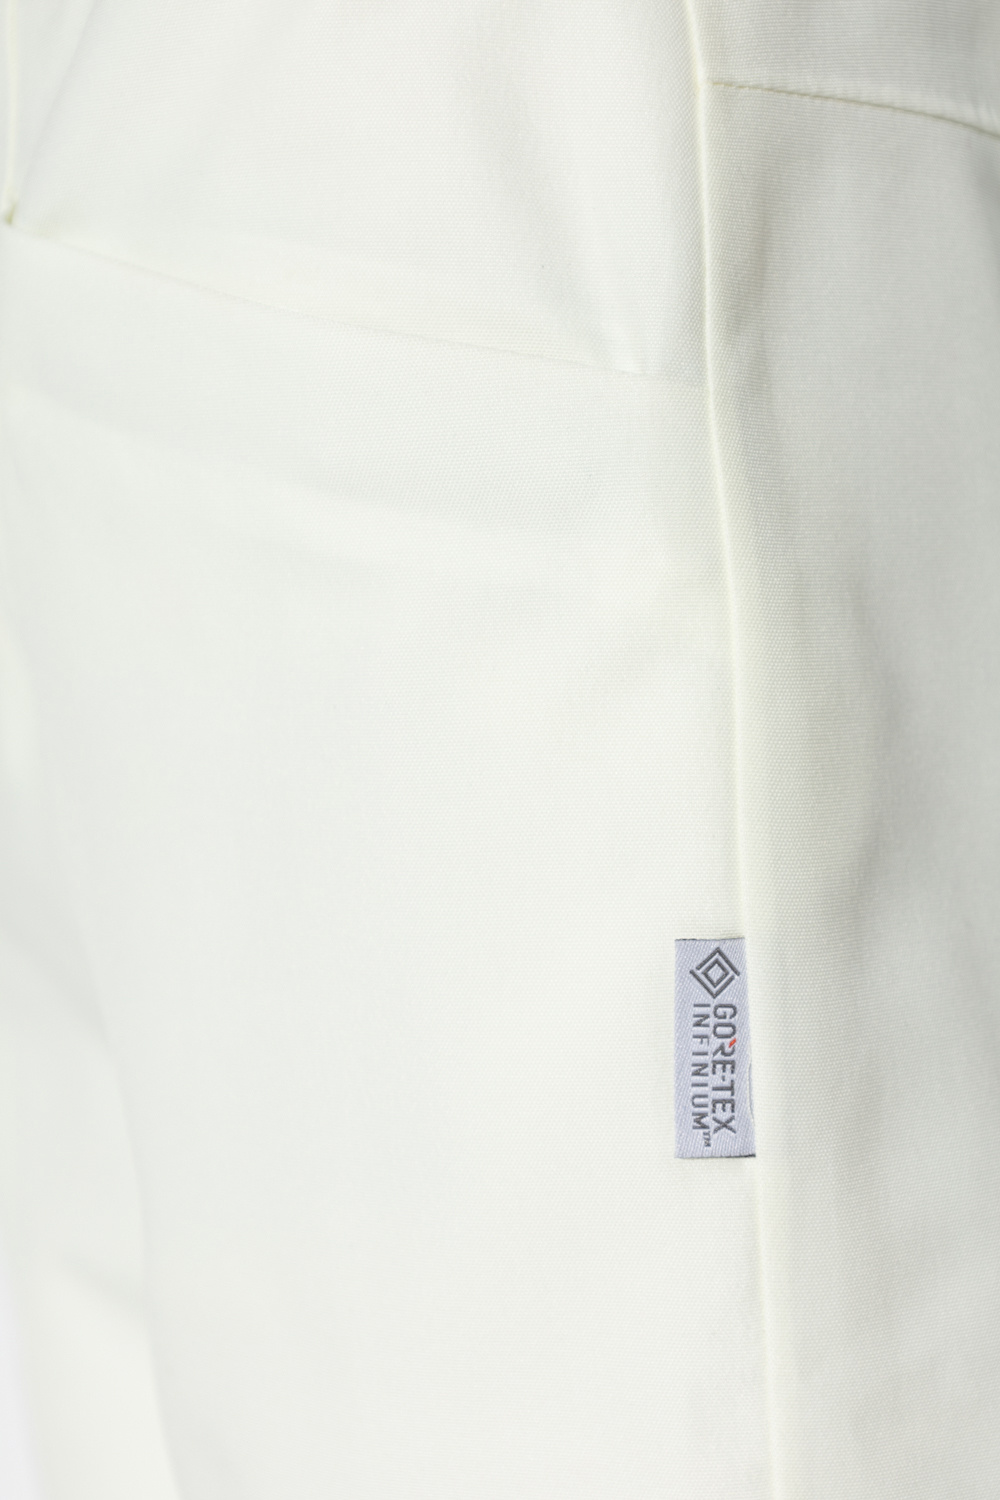 Moncler Grenoble giambattista valli printed silk dress item